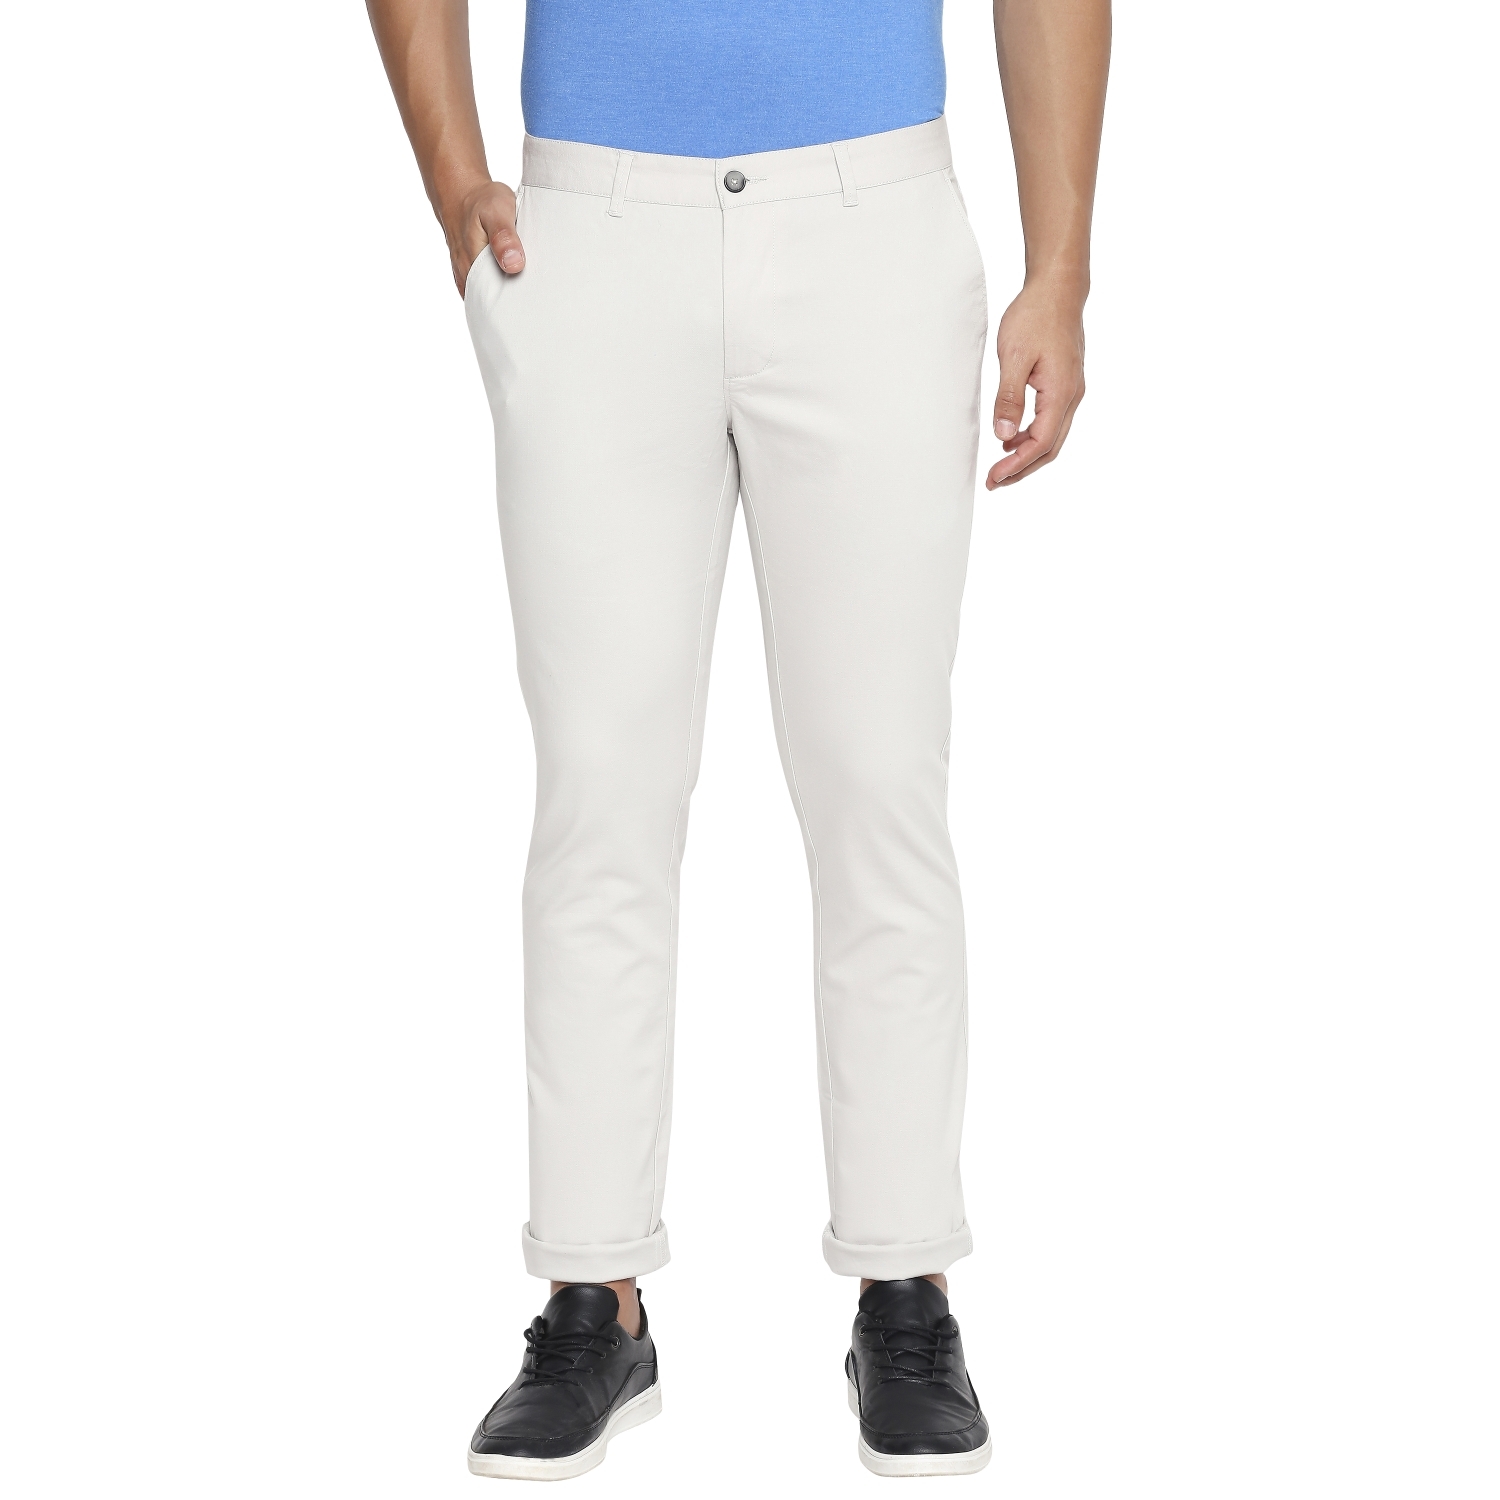 Basics | Basics Tapered Fit Vapor Blue Stretch Trouser